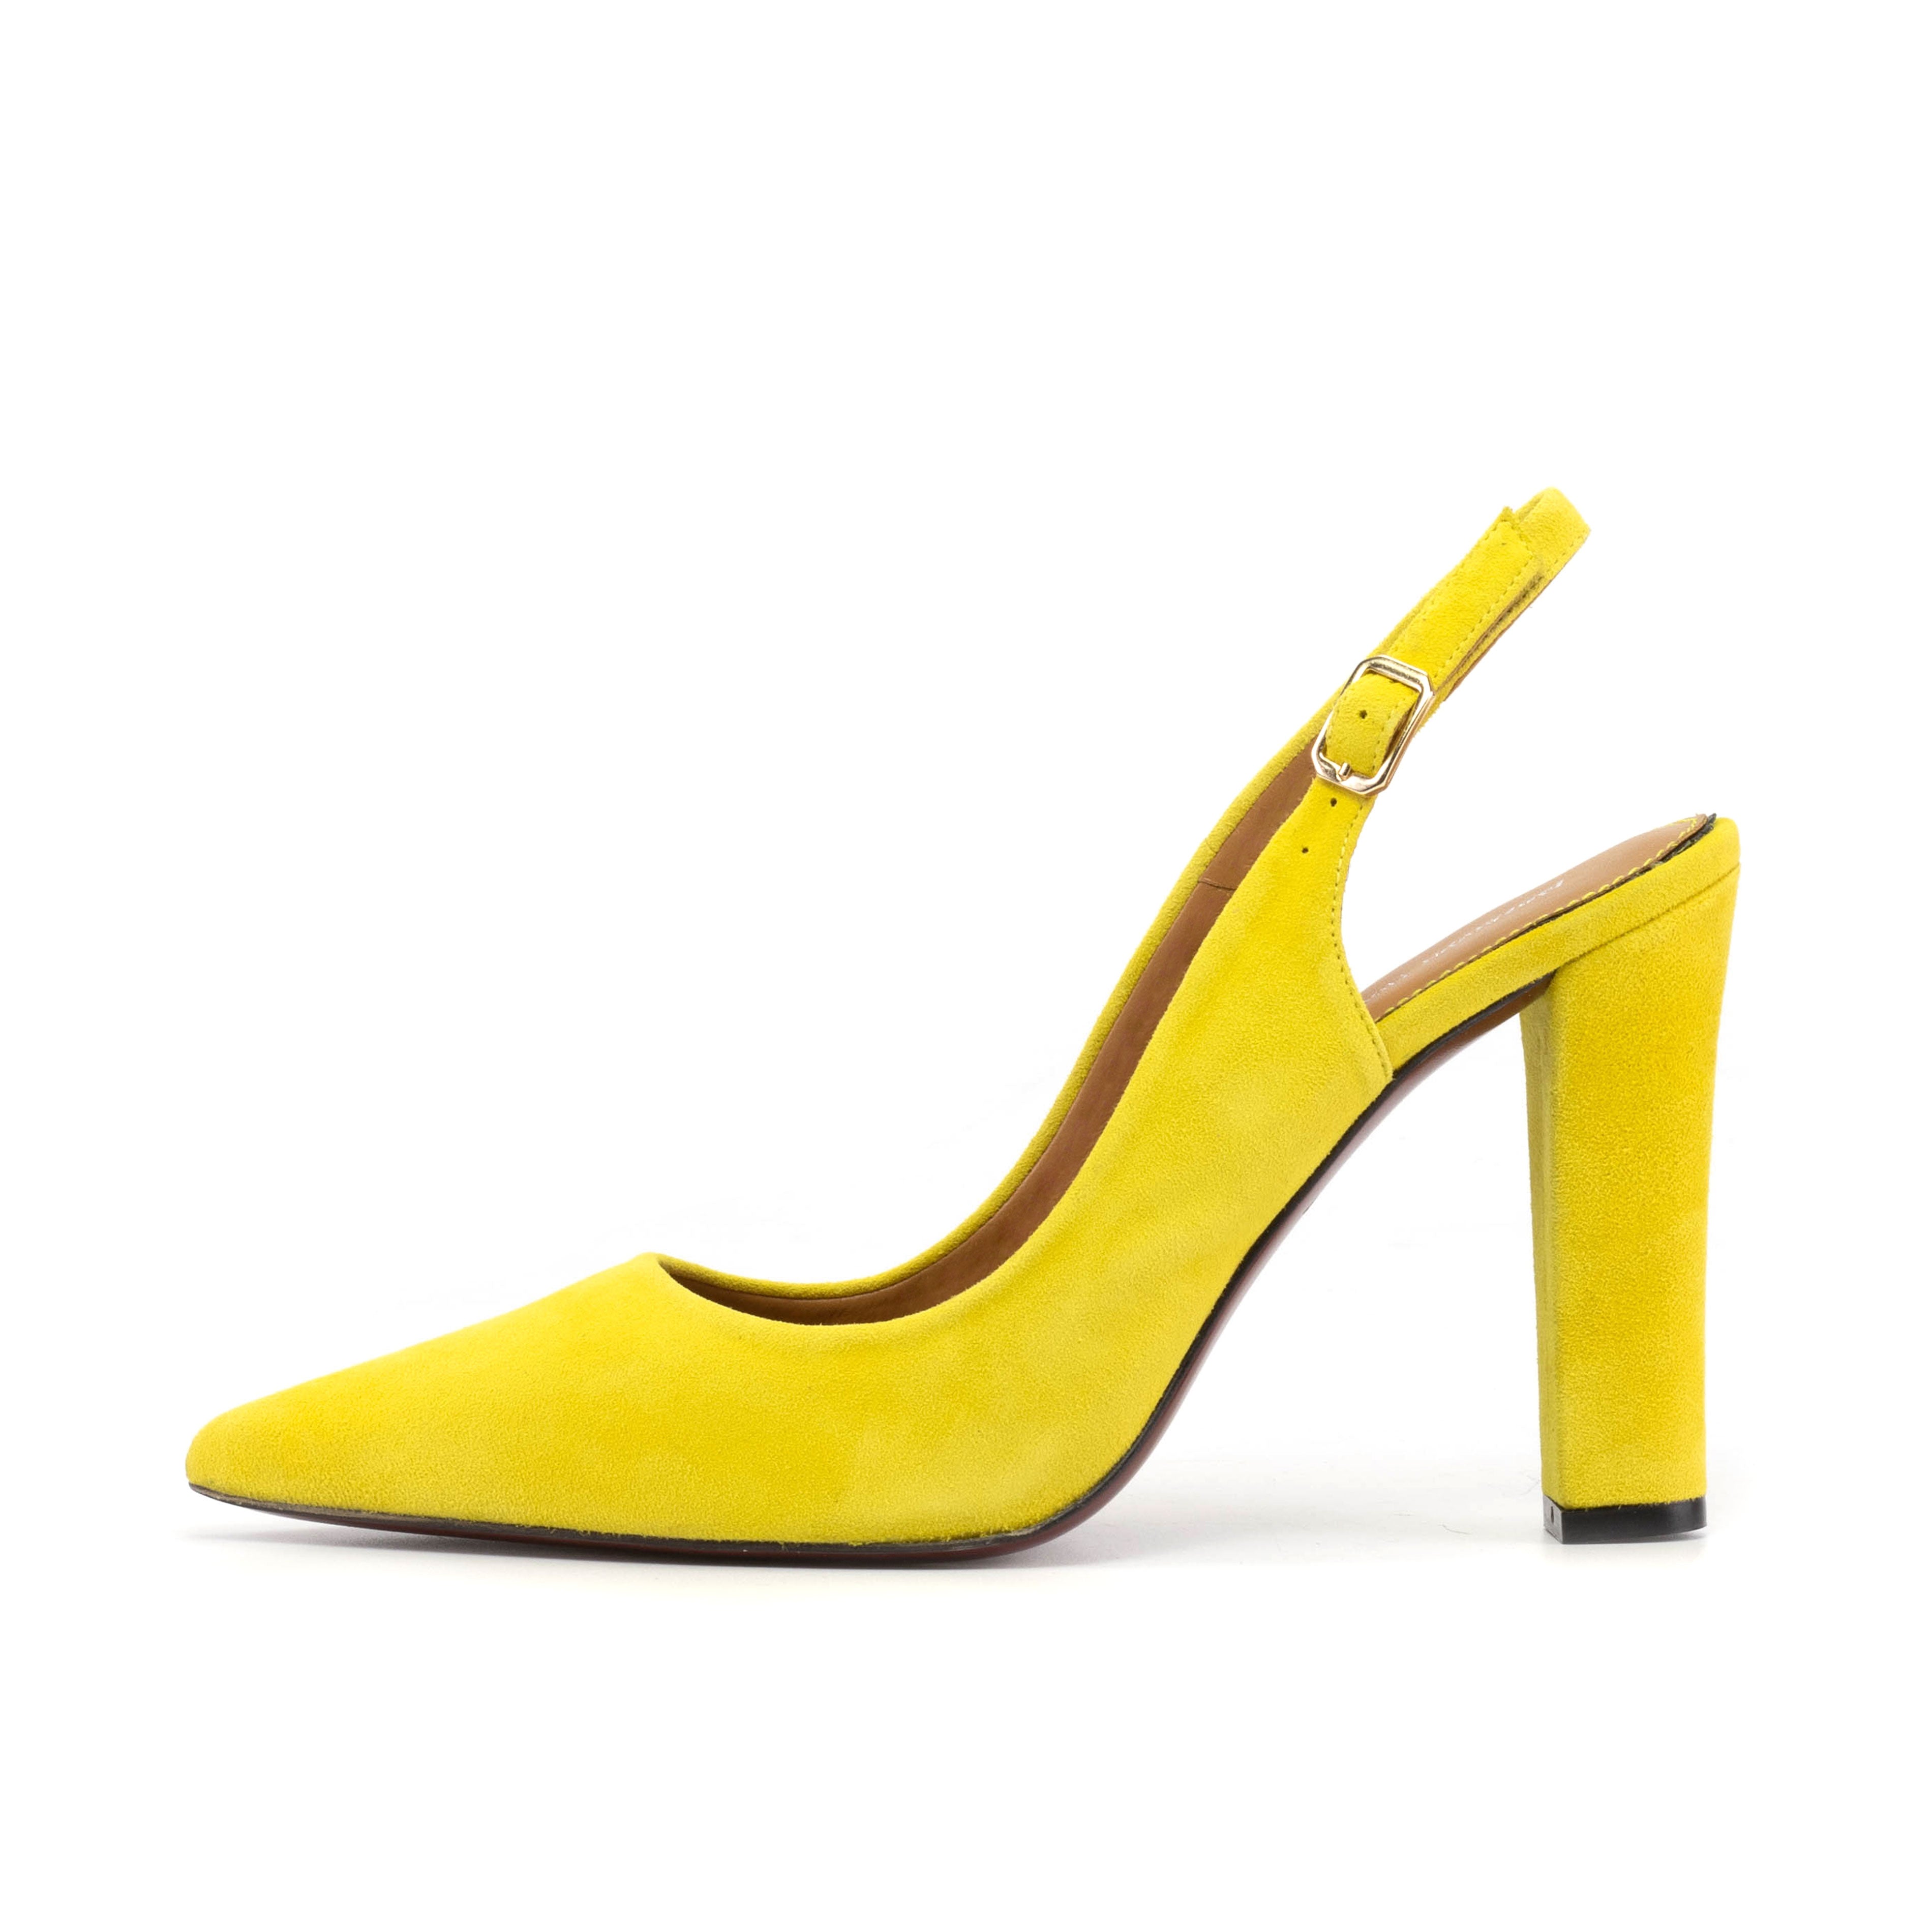 Premium Photo | Beautiful female legs in yellow snake skin high heels shoes